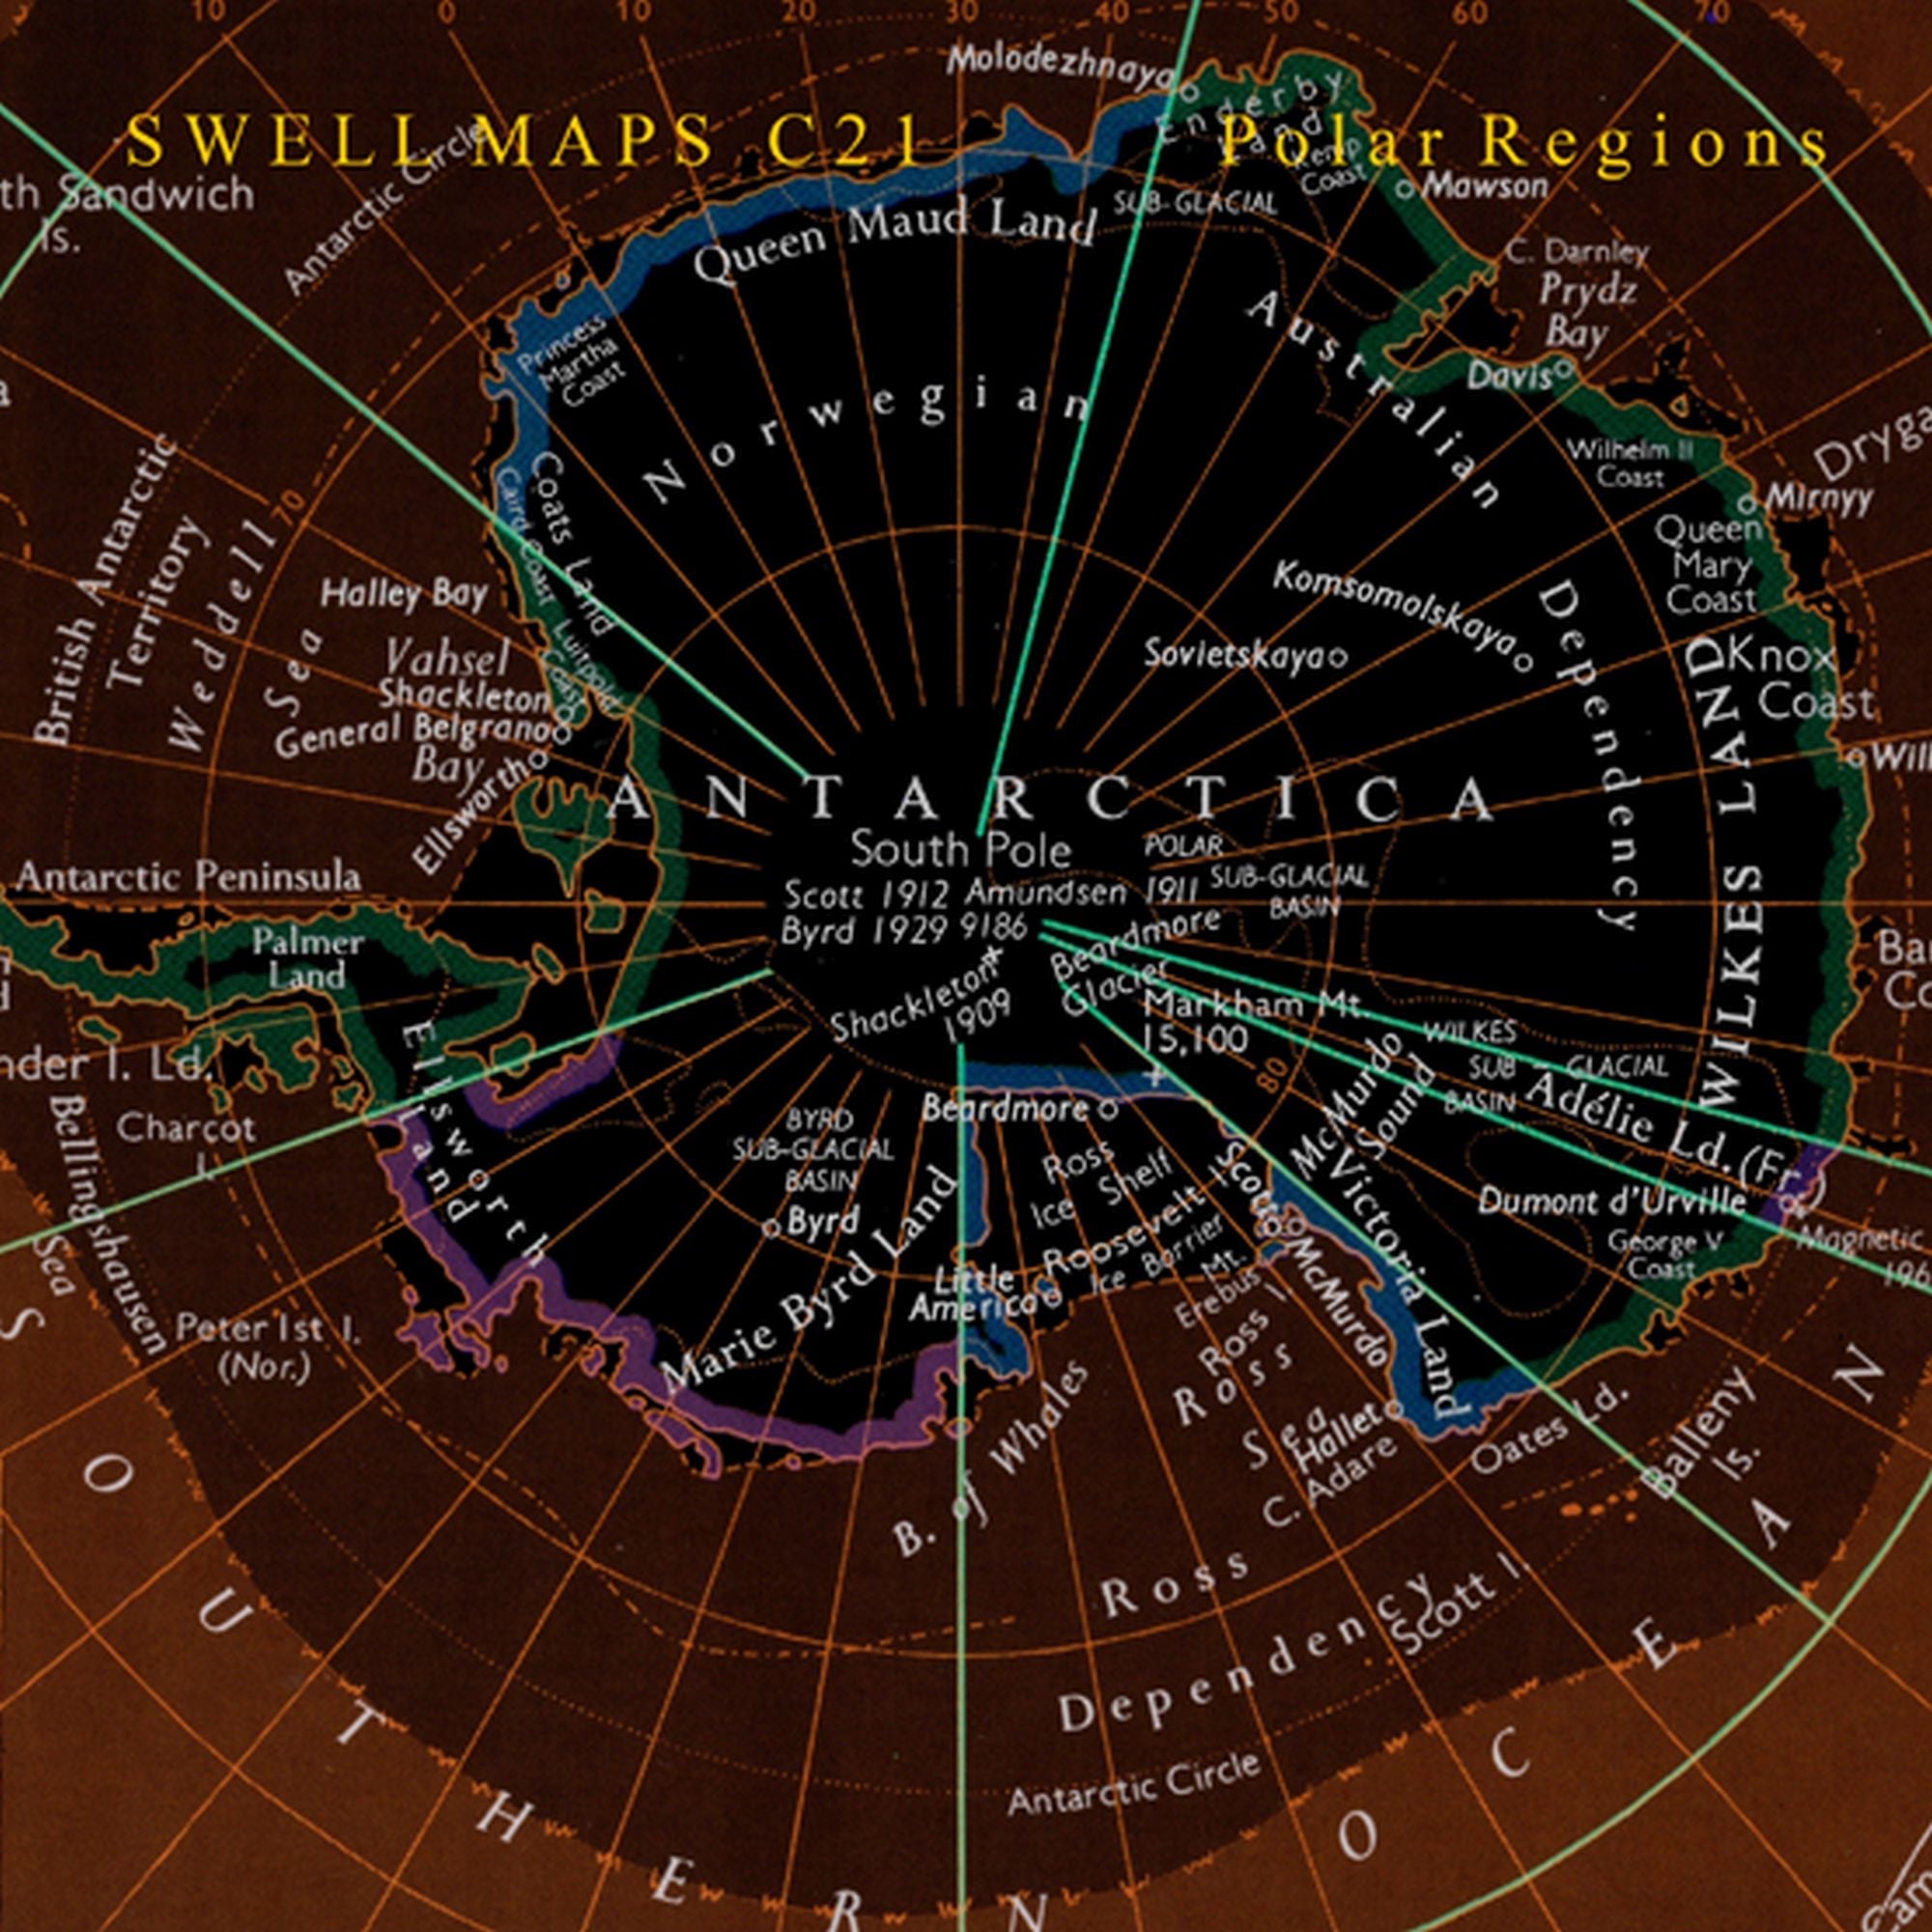 Swell Maps C21 - Polar Regions - 33RPM